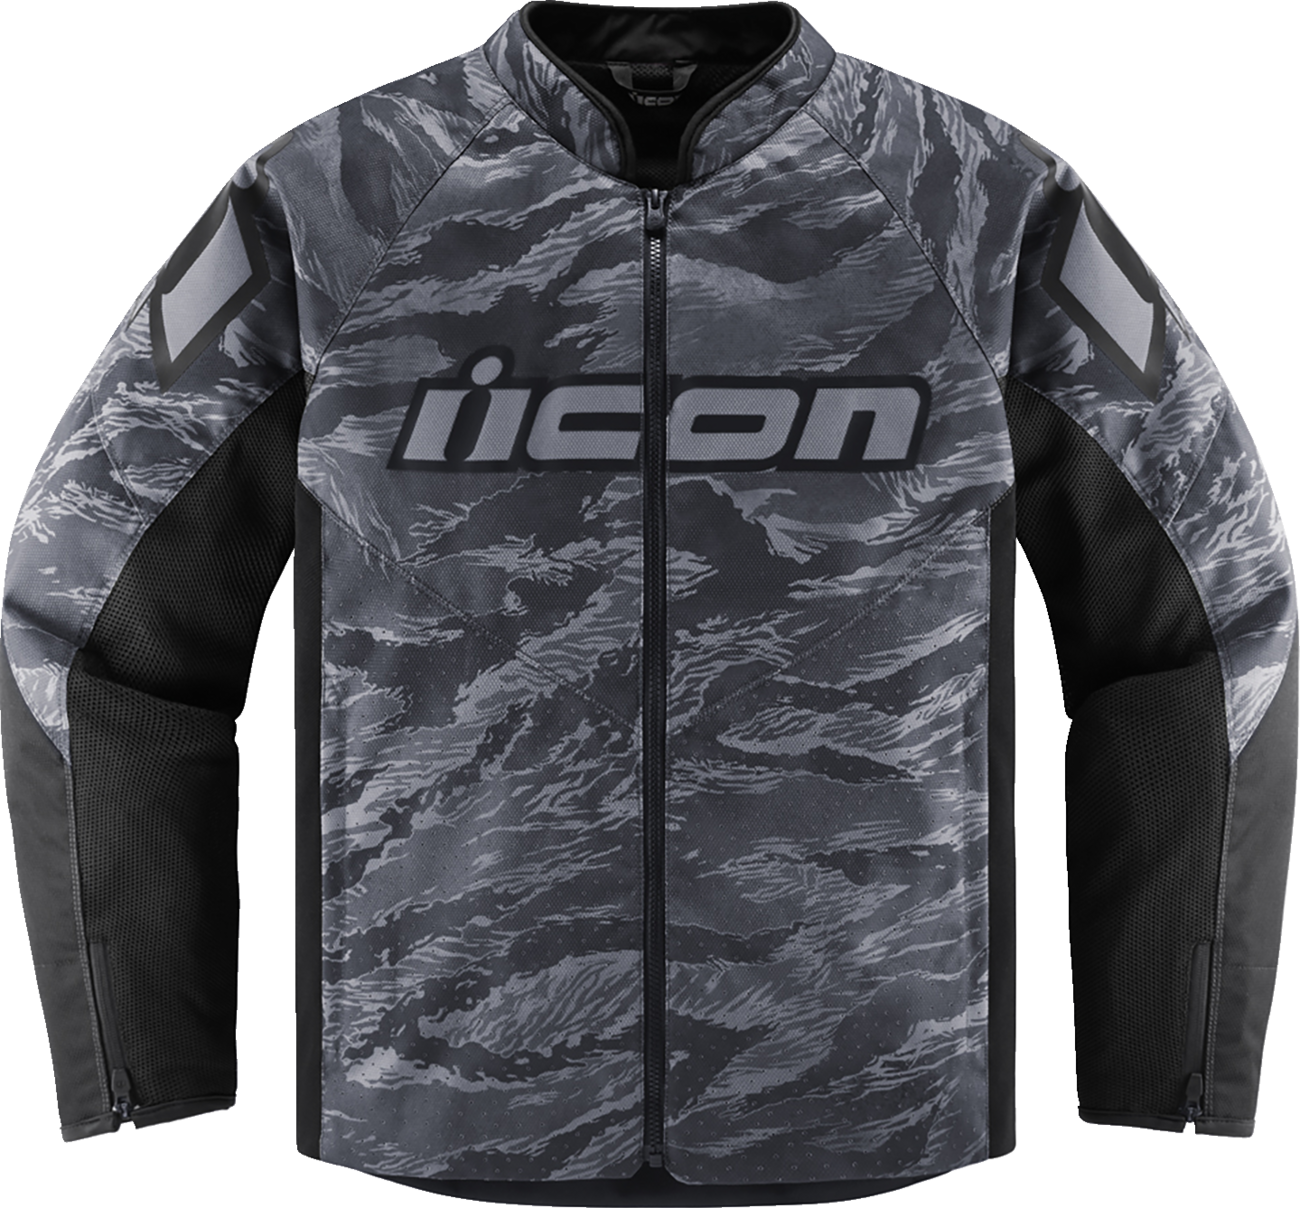 ICON Hooligan CE Tiger's Blood Jacket - Gray - Small 2820-6159